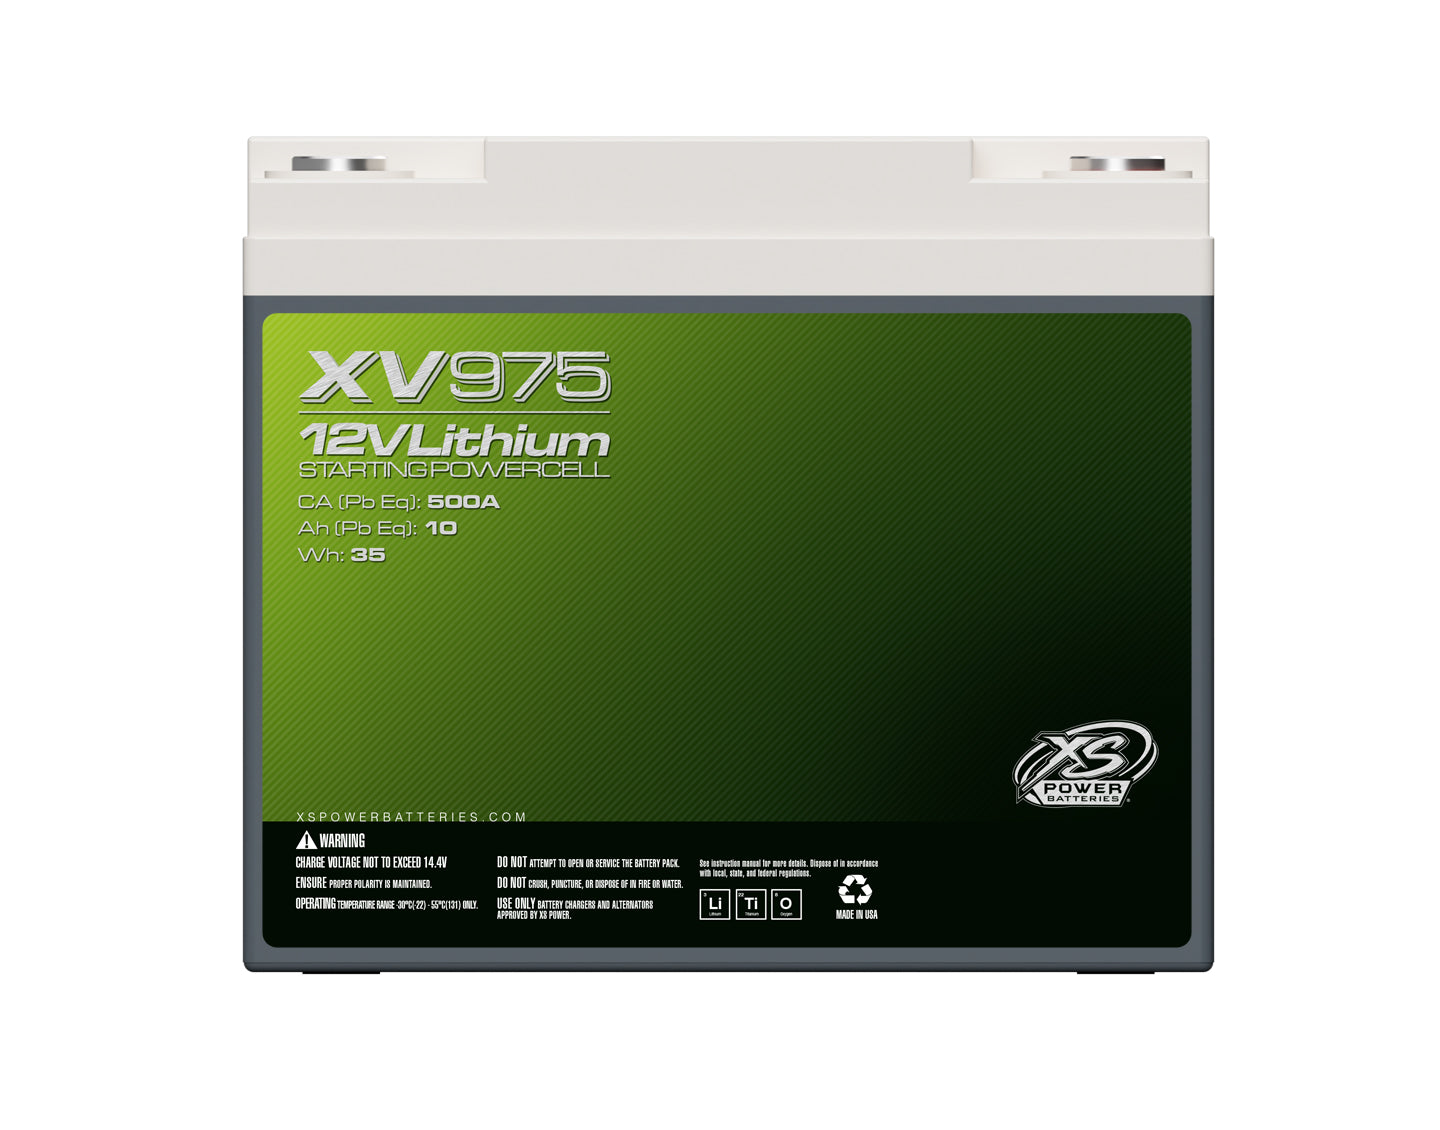 XV975 XS Power 12VDC Group U1R Lithium LTO Underhood-Safe Battery 750W 35Wh